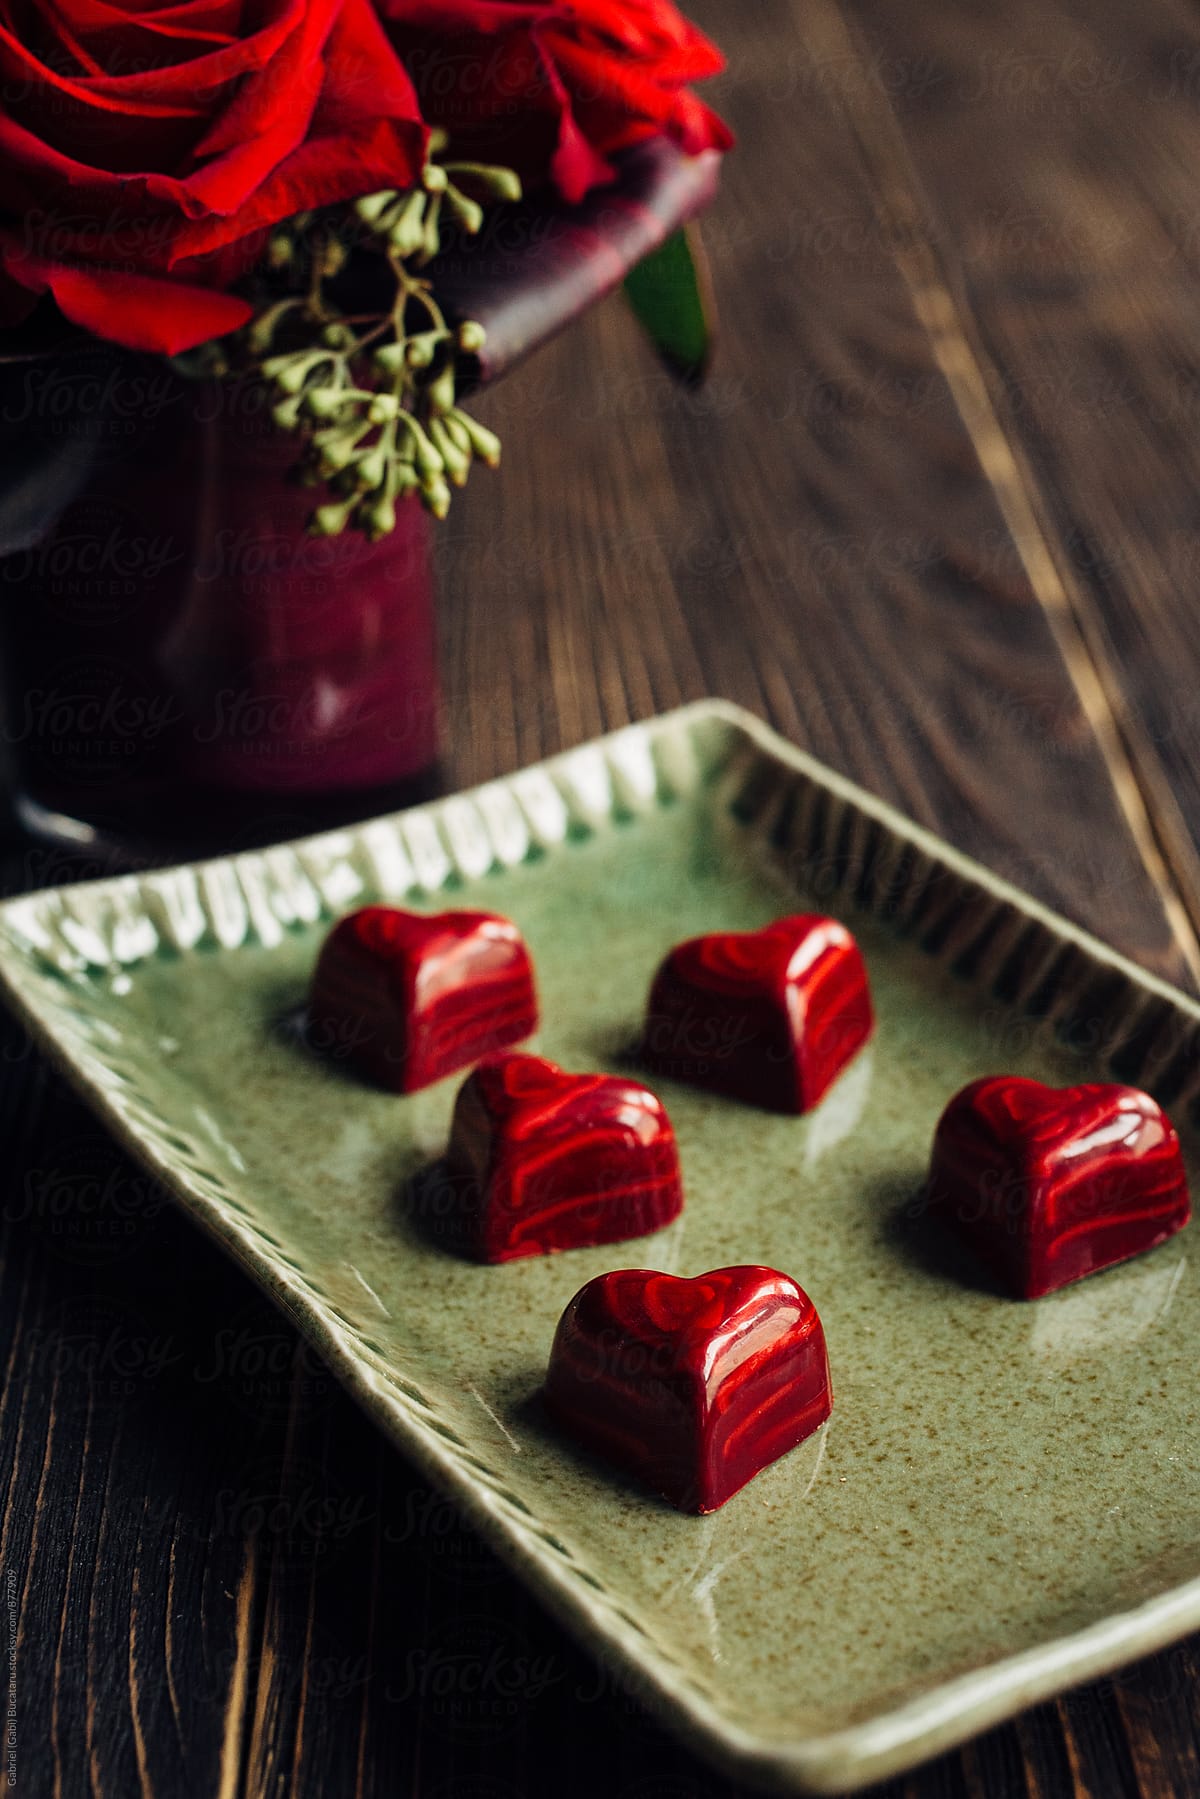 Hear shaped red chocolates on a tray